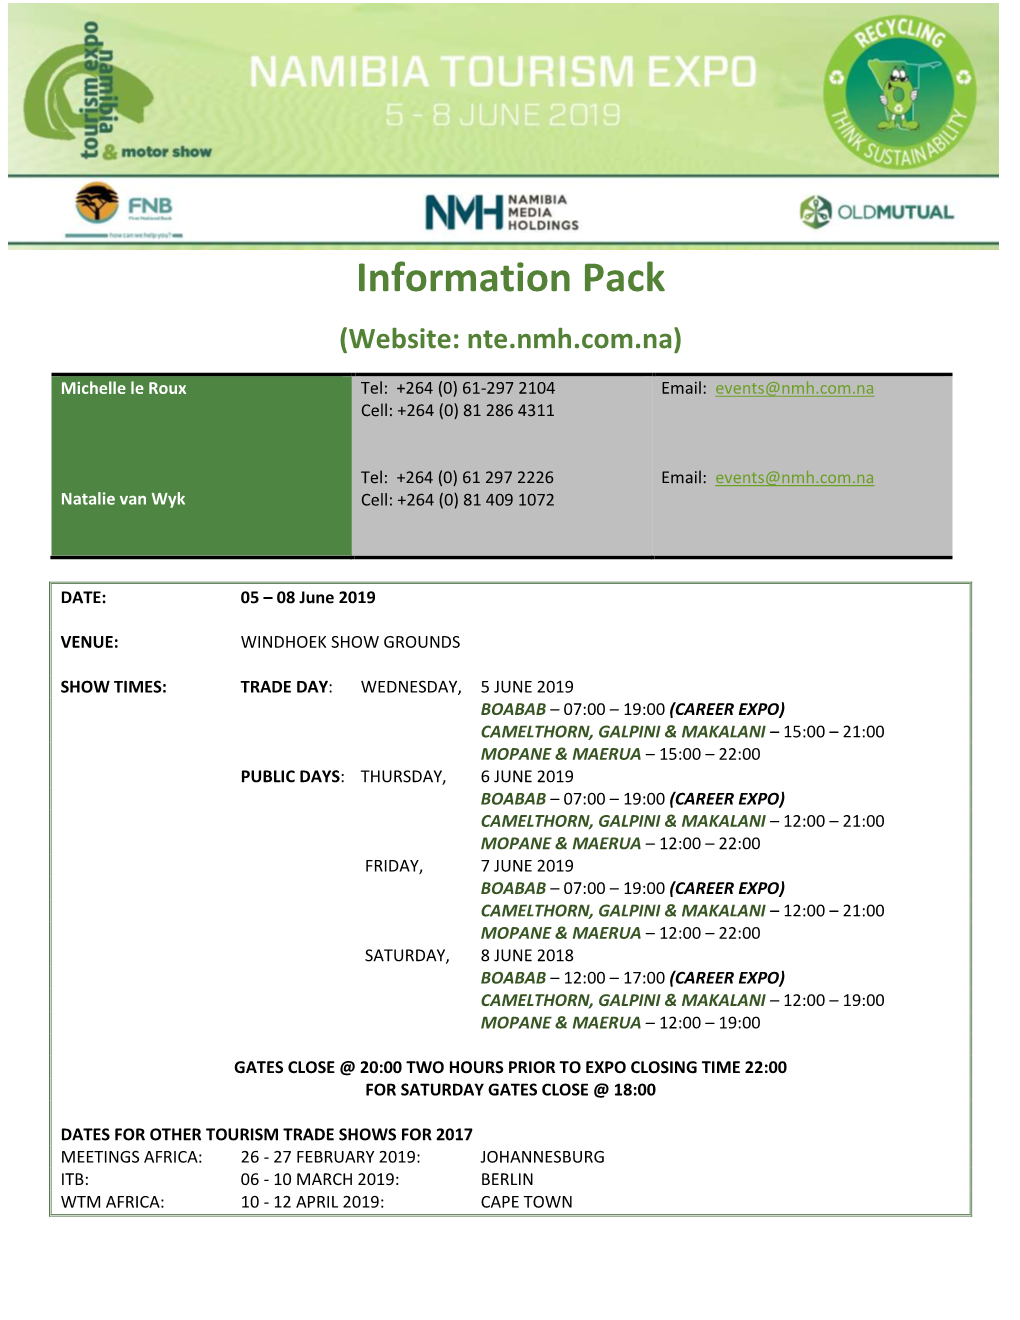 Information Pack (Website: Nte.Nmh.Com.Na)